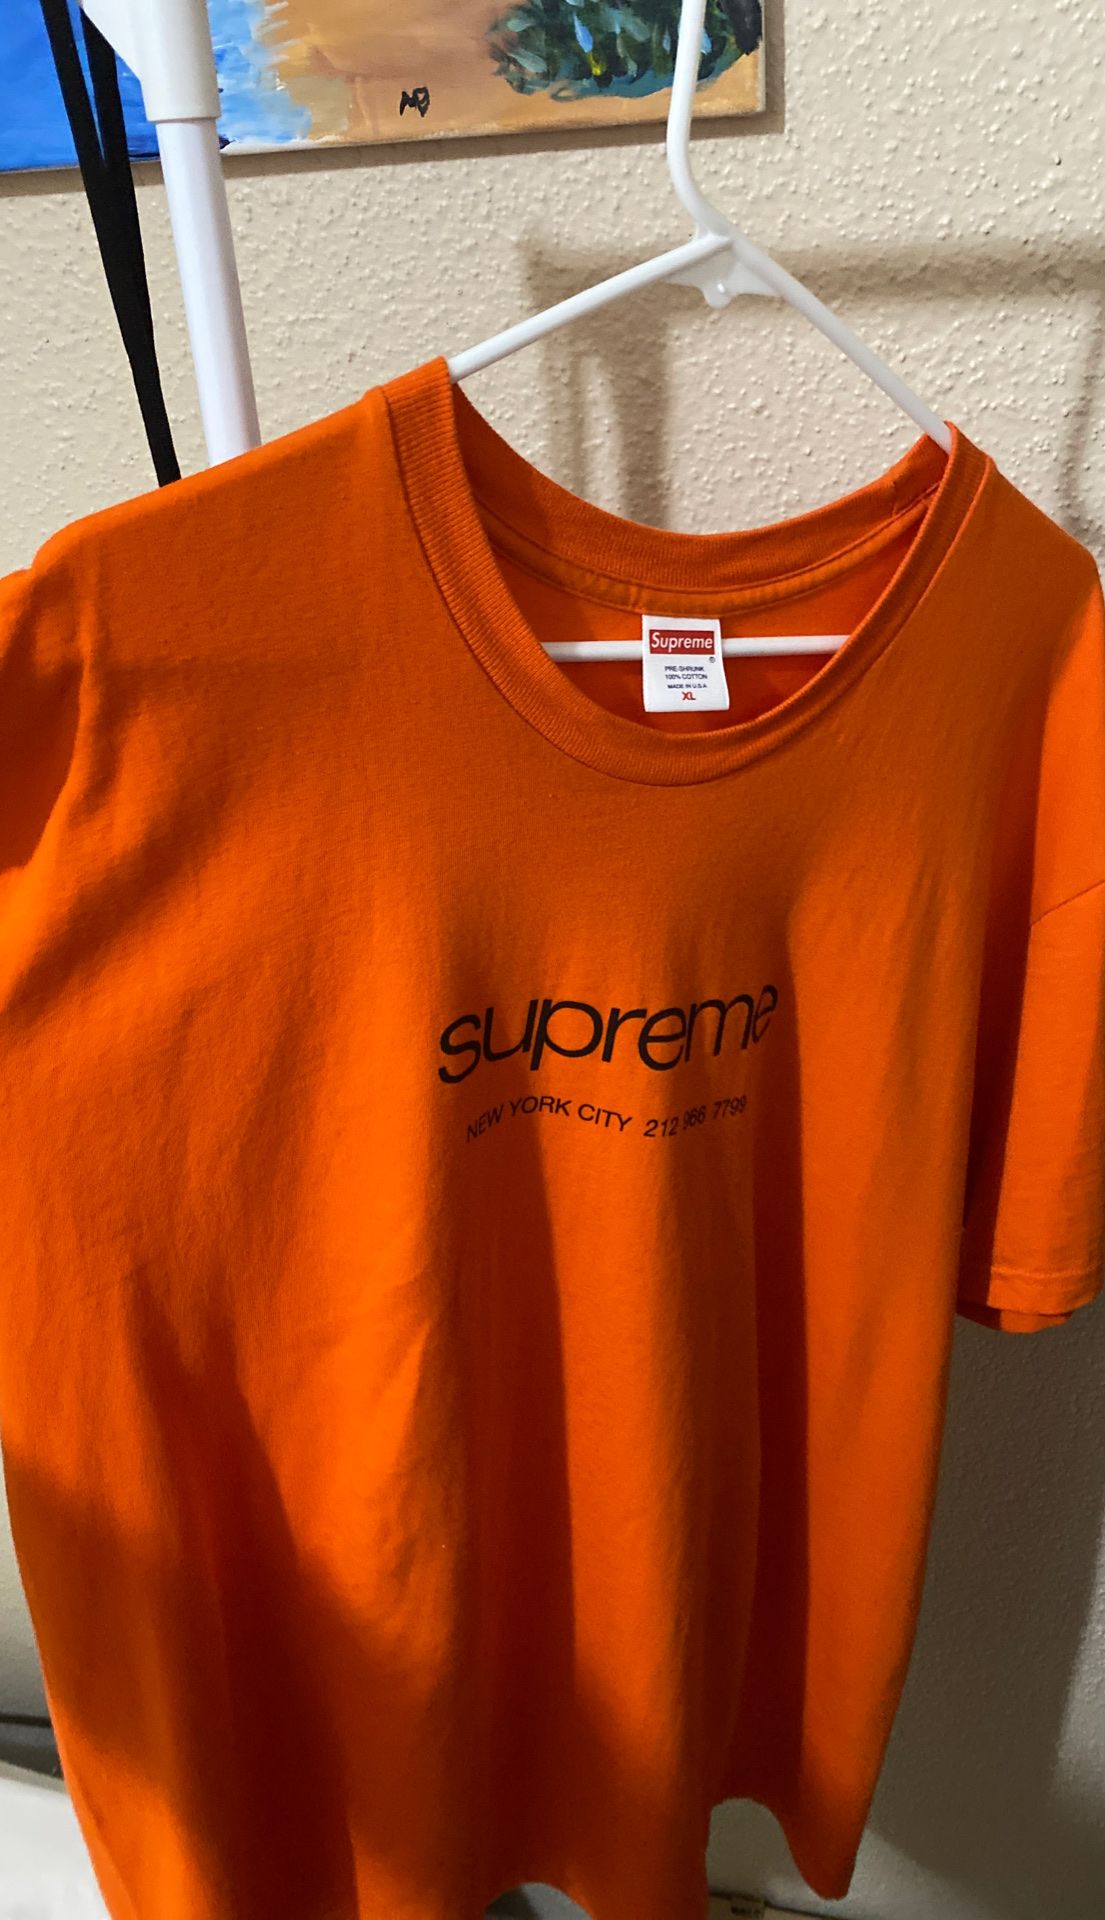 Supreme shirt sz xl worn once